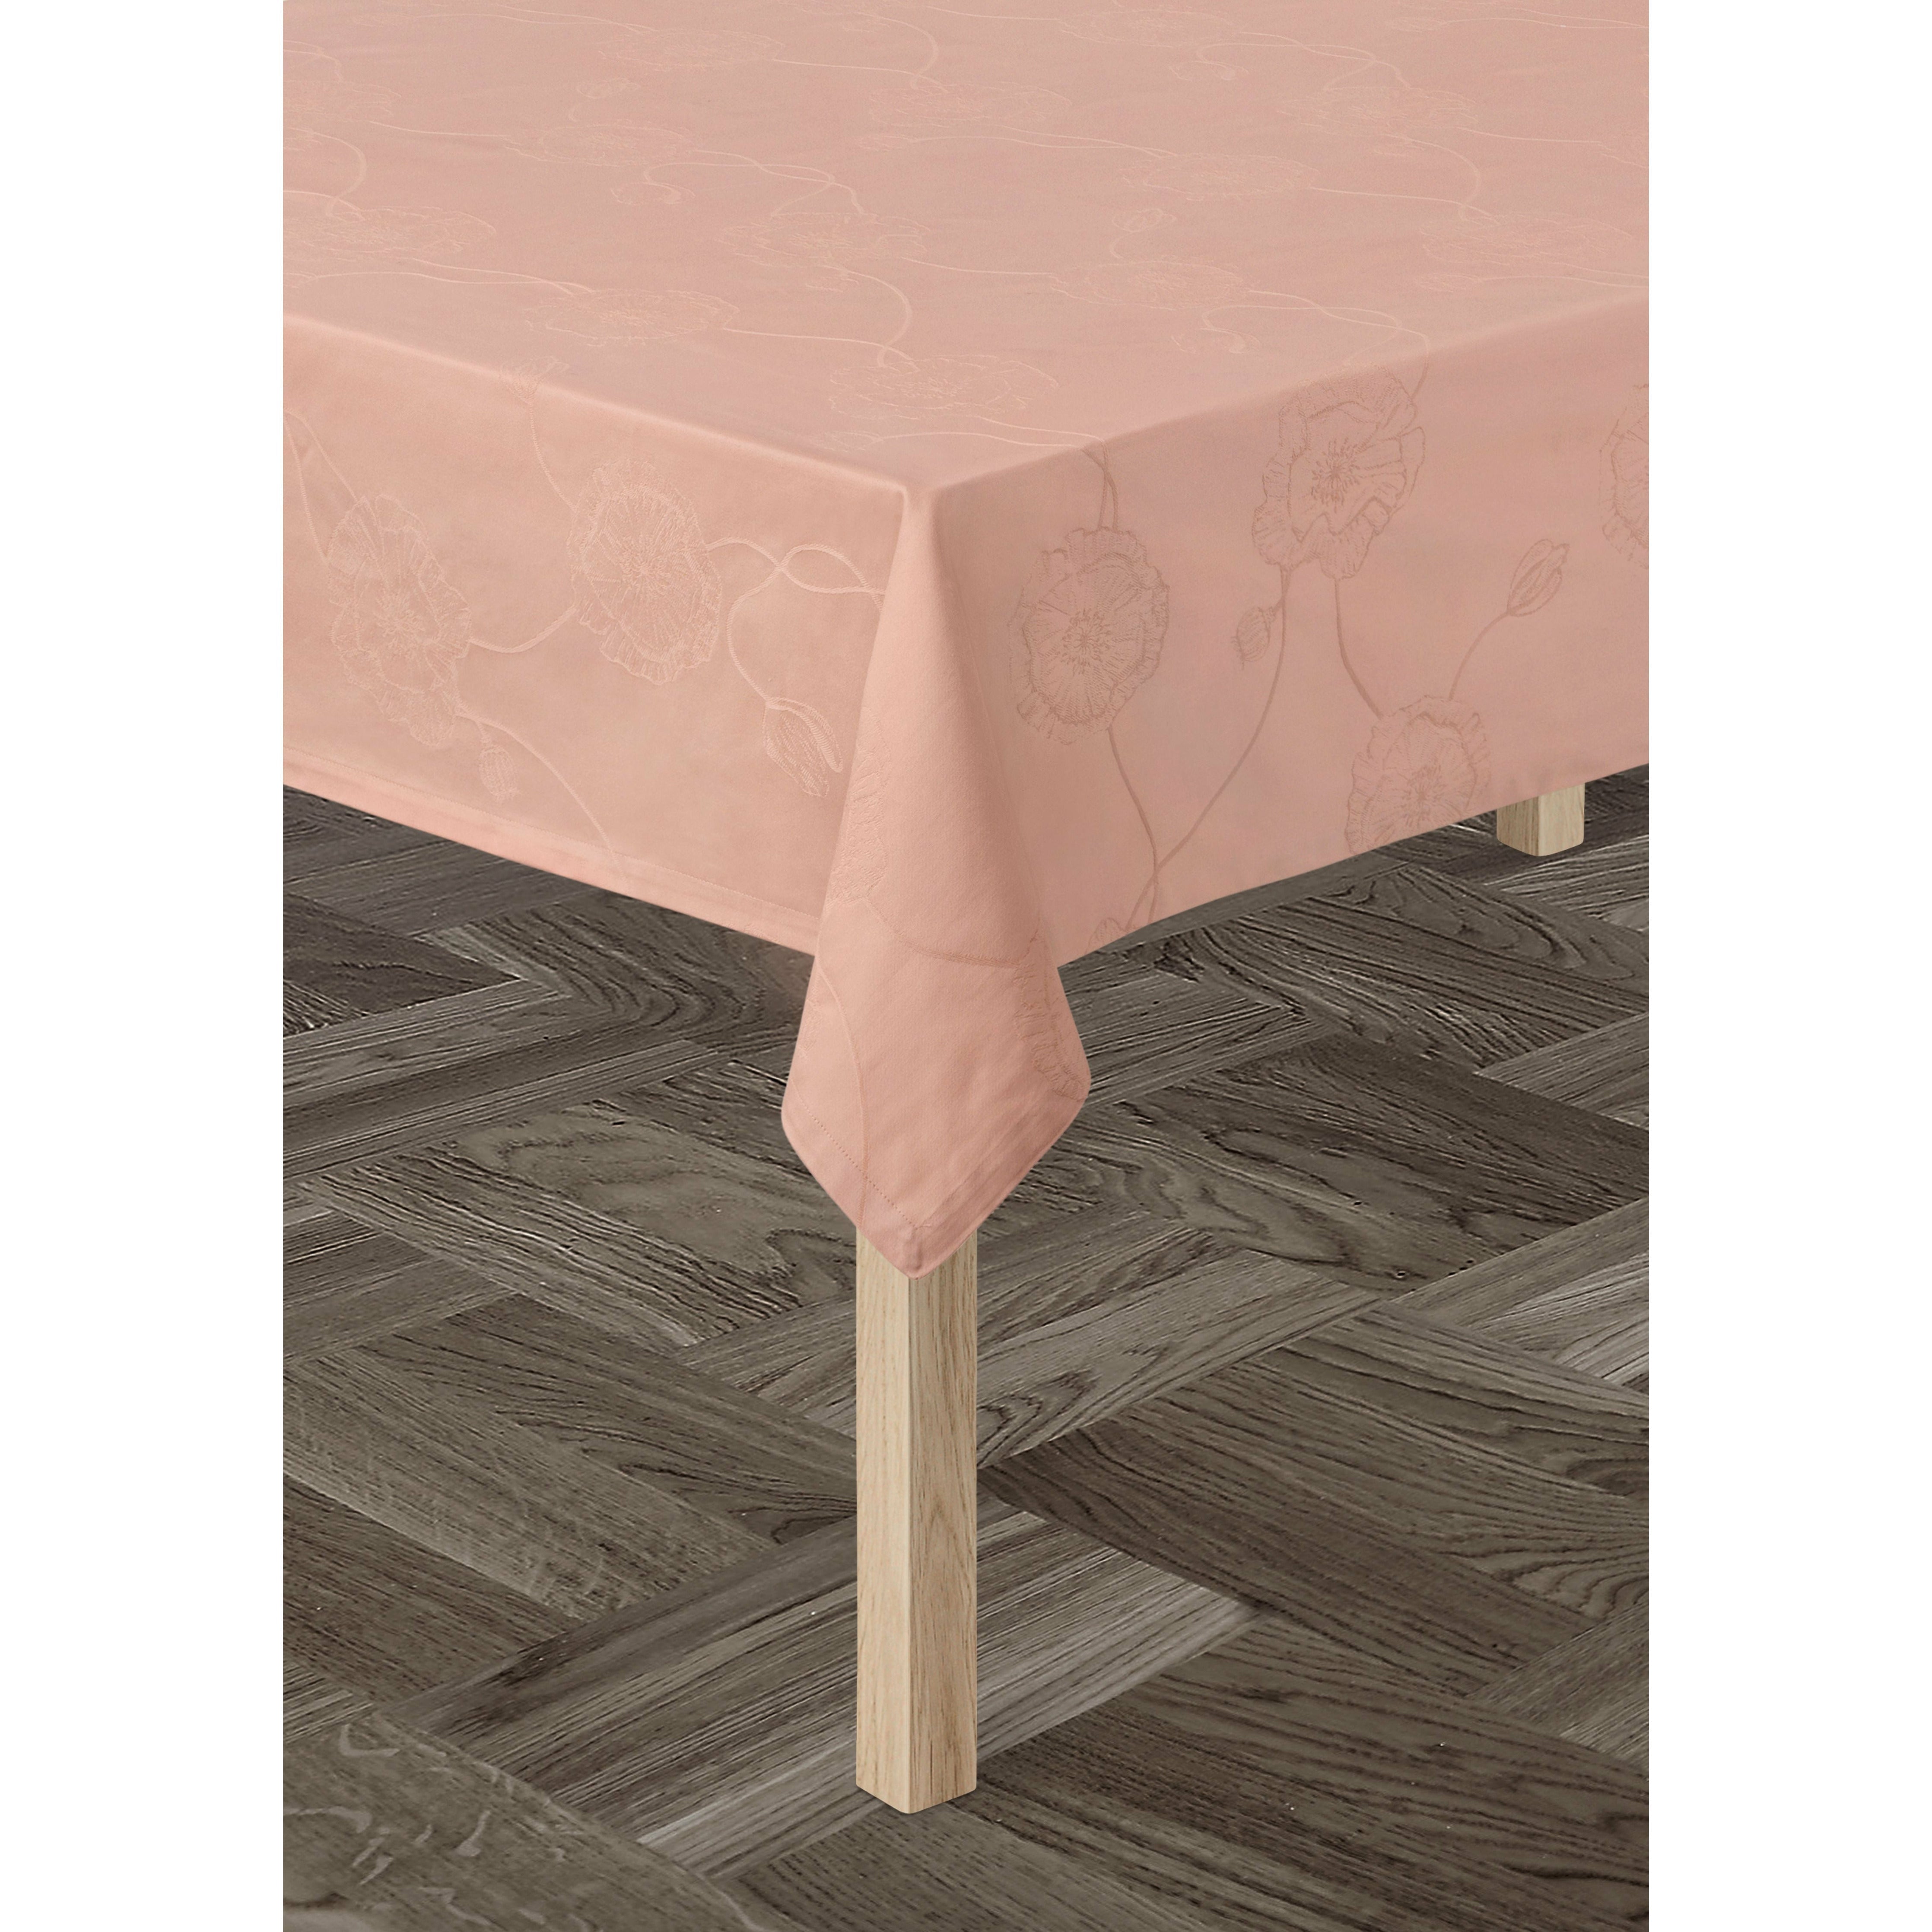 Kähler Hammershøi Poppy Table Cloth 150x270 cm, nuda